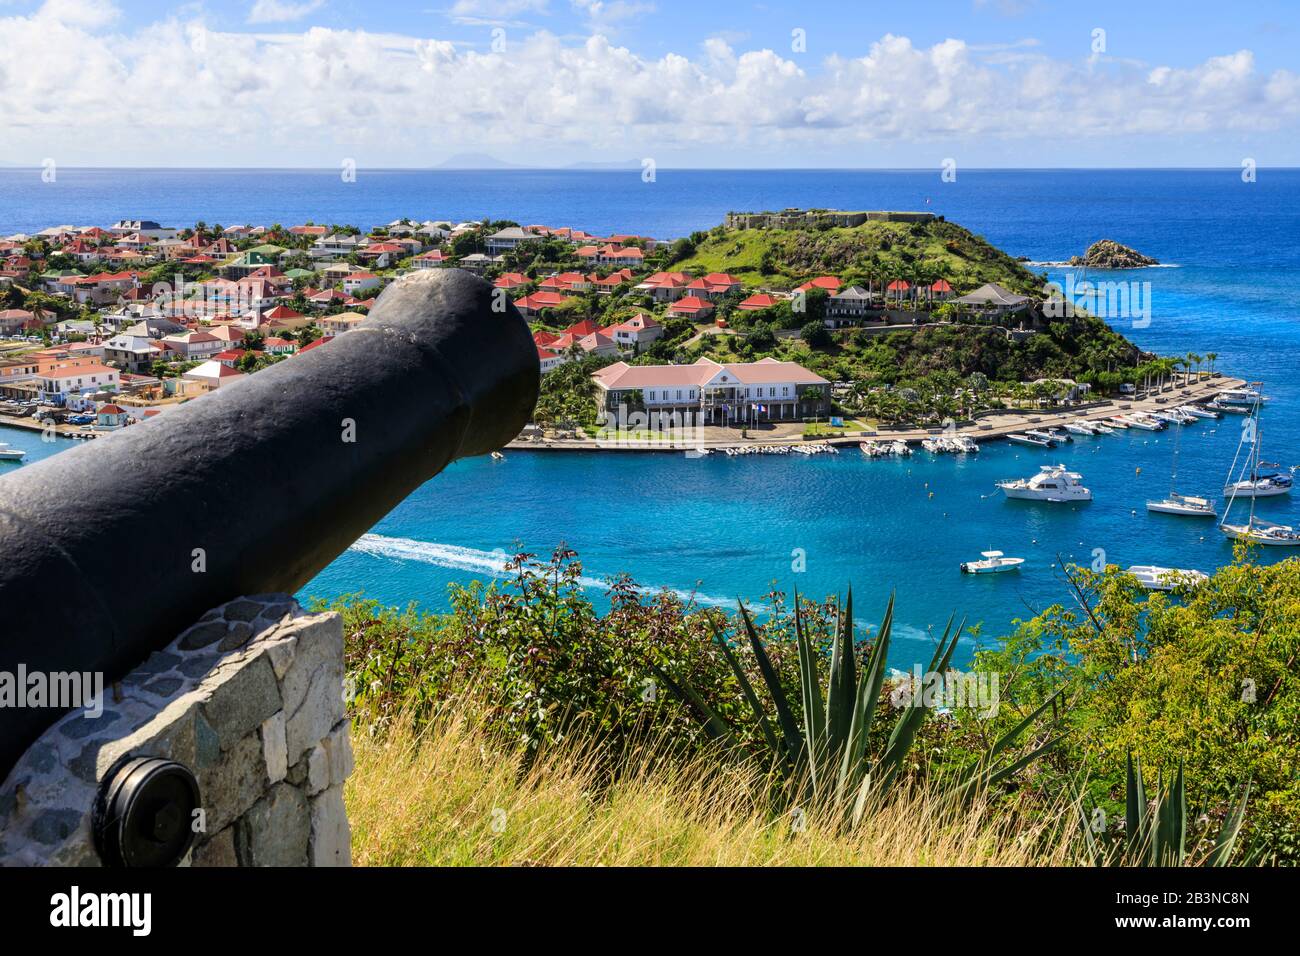 Cannon in Fort Gustaf, Blick auf Fort Oscar, Gustavia, St. Barthelemy (St. Barts) (St. Barth), Westindien, Karibik, Mittelamerika Stockfoto